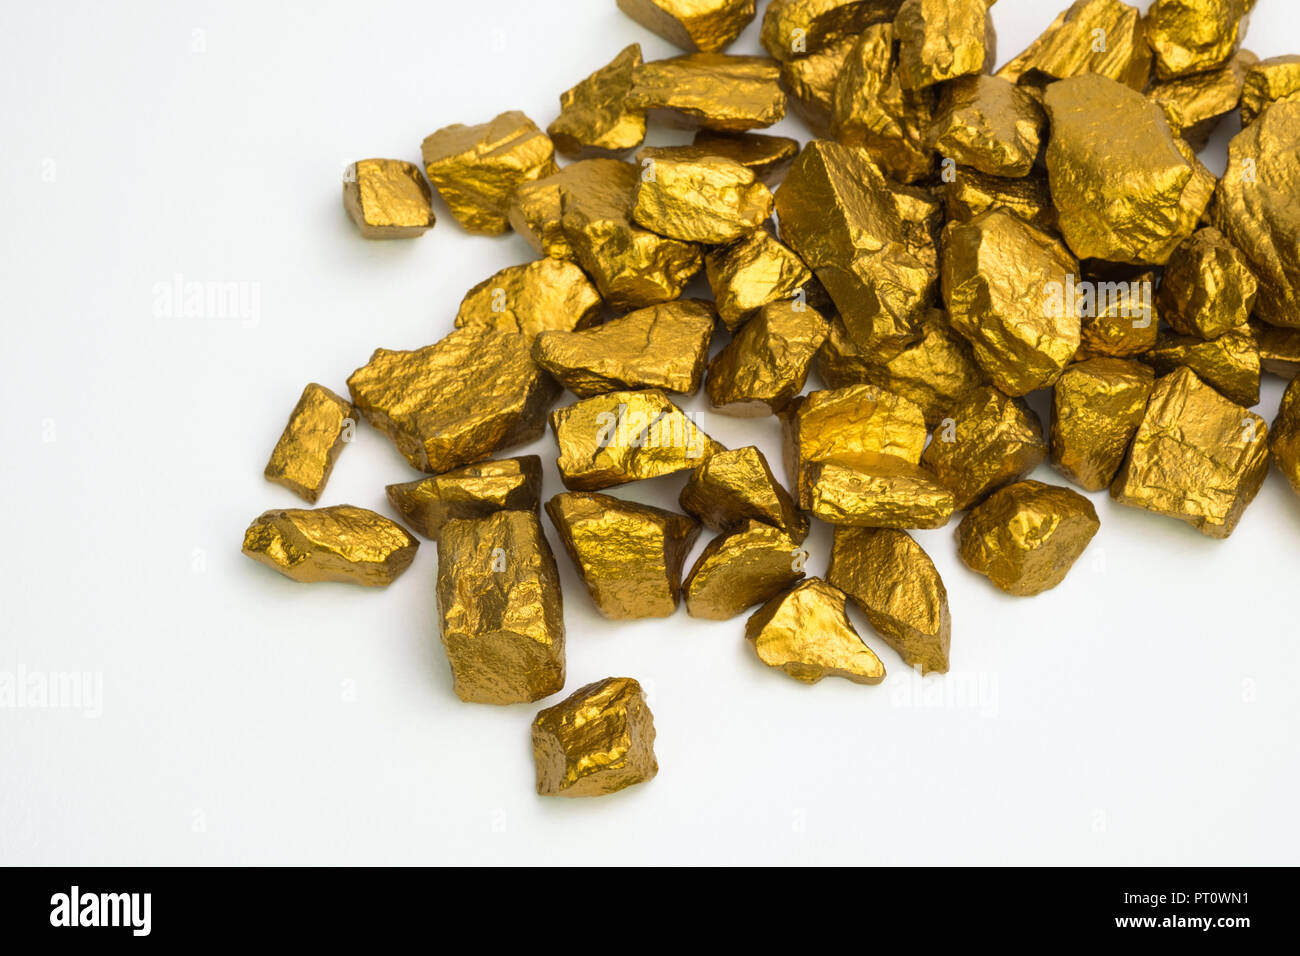 Many Gold Nuggets Background Stock Photo by ©serezniy 219420282